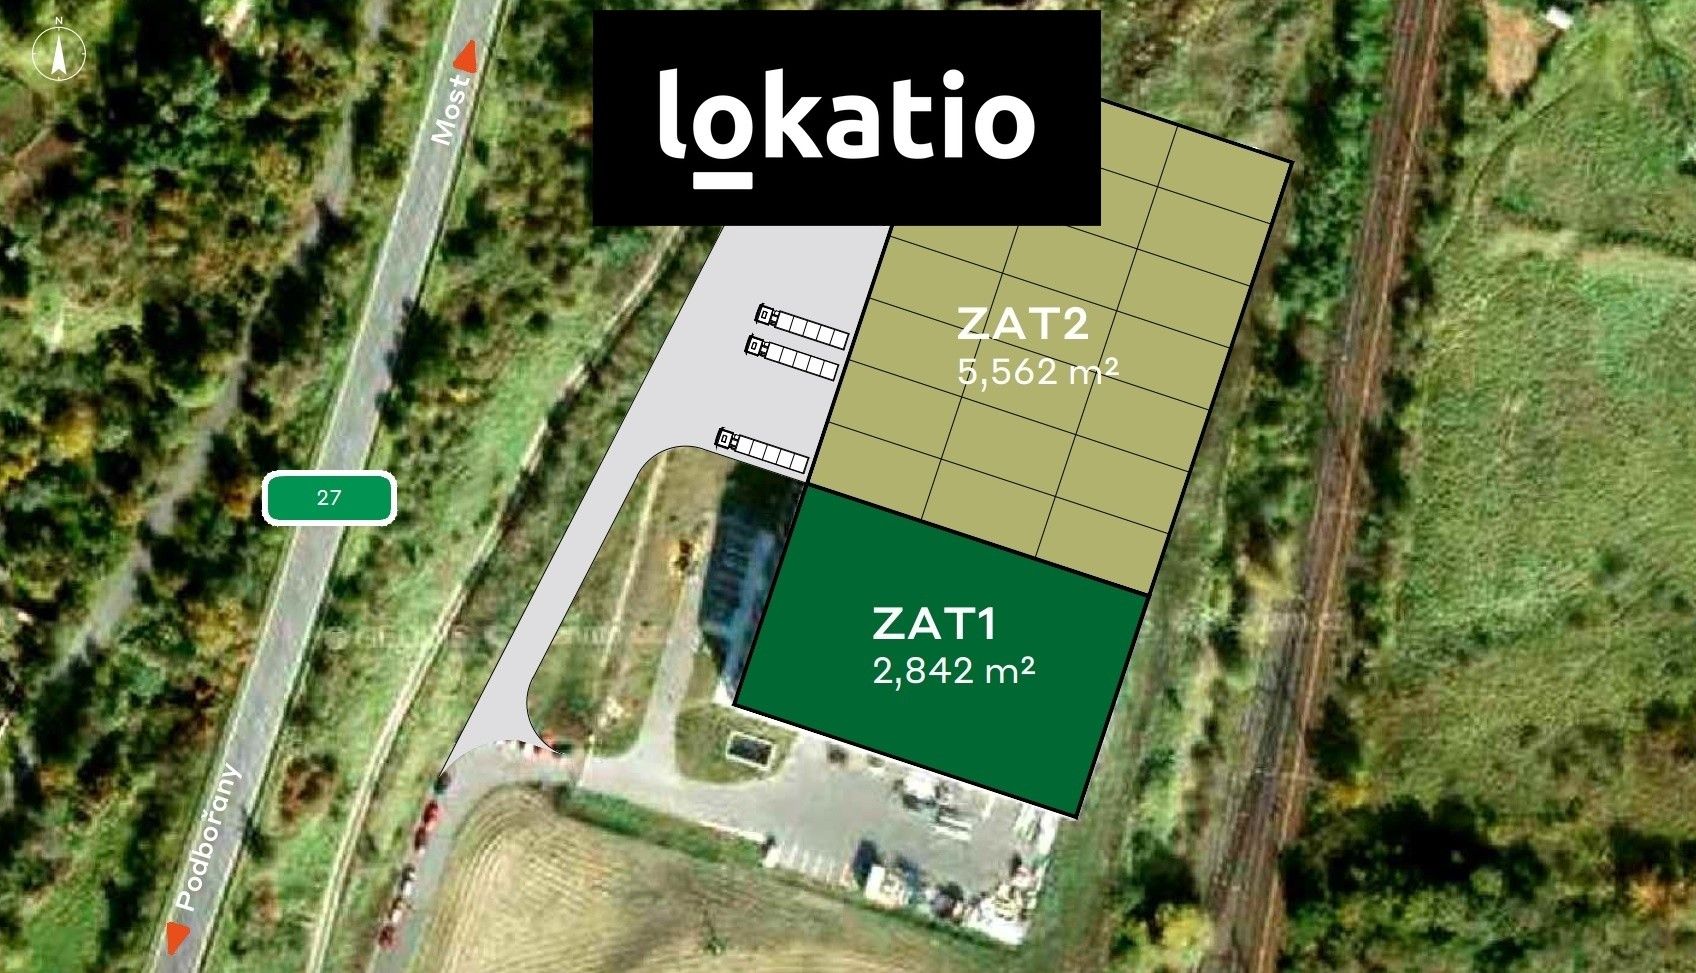 Pronájem sklad - Plzeňská, Žatec, 5 562 m²